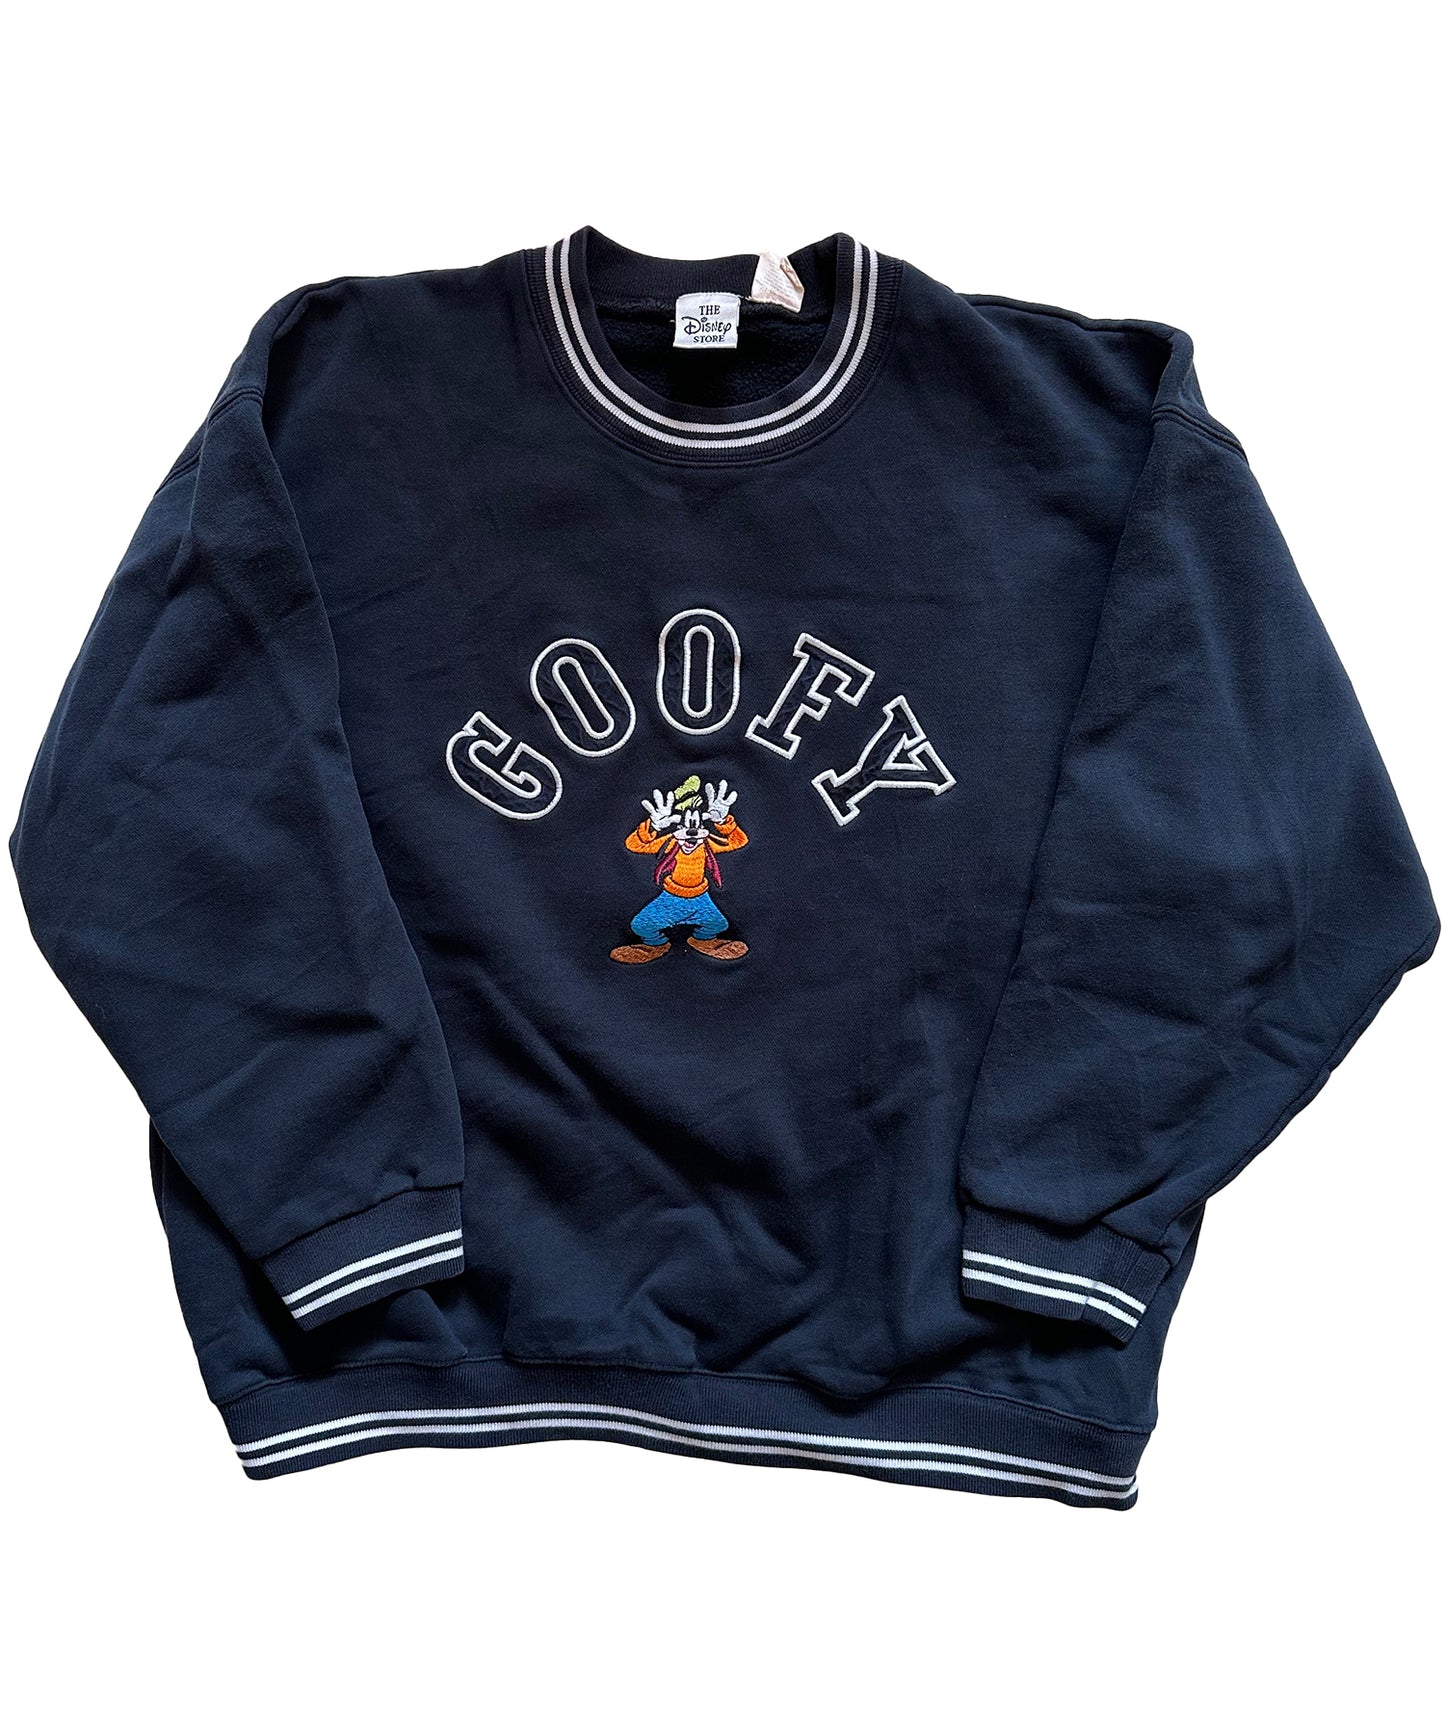 Disney Goofy Crewneck Sweater (Large)